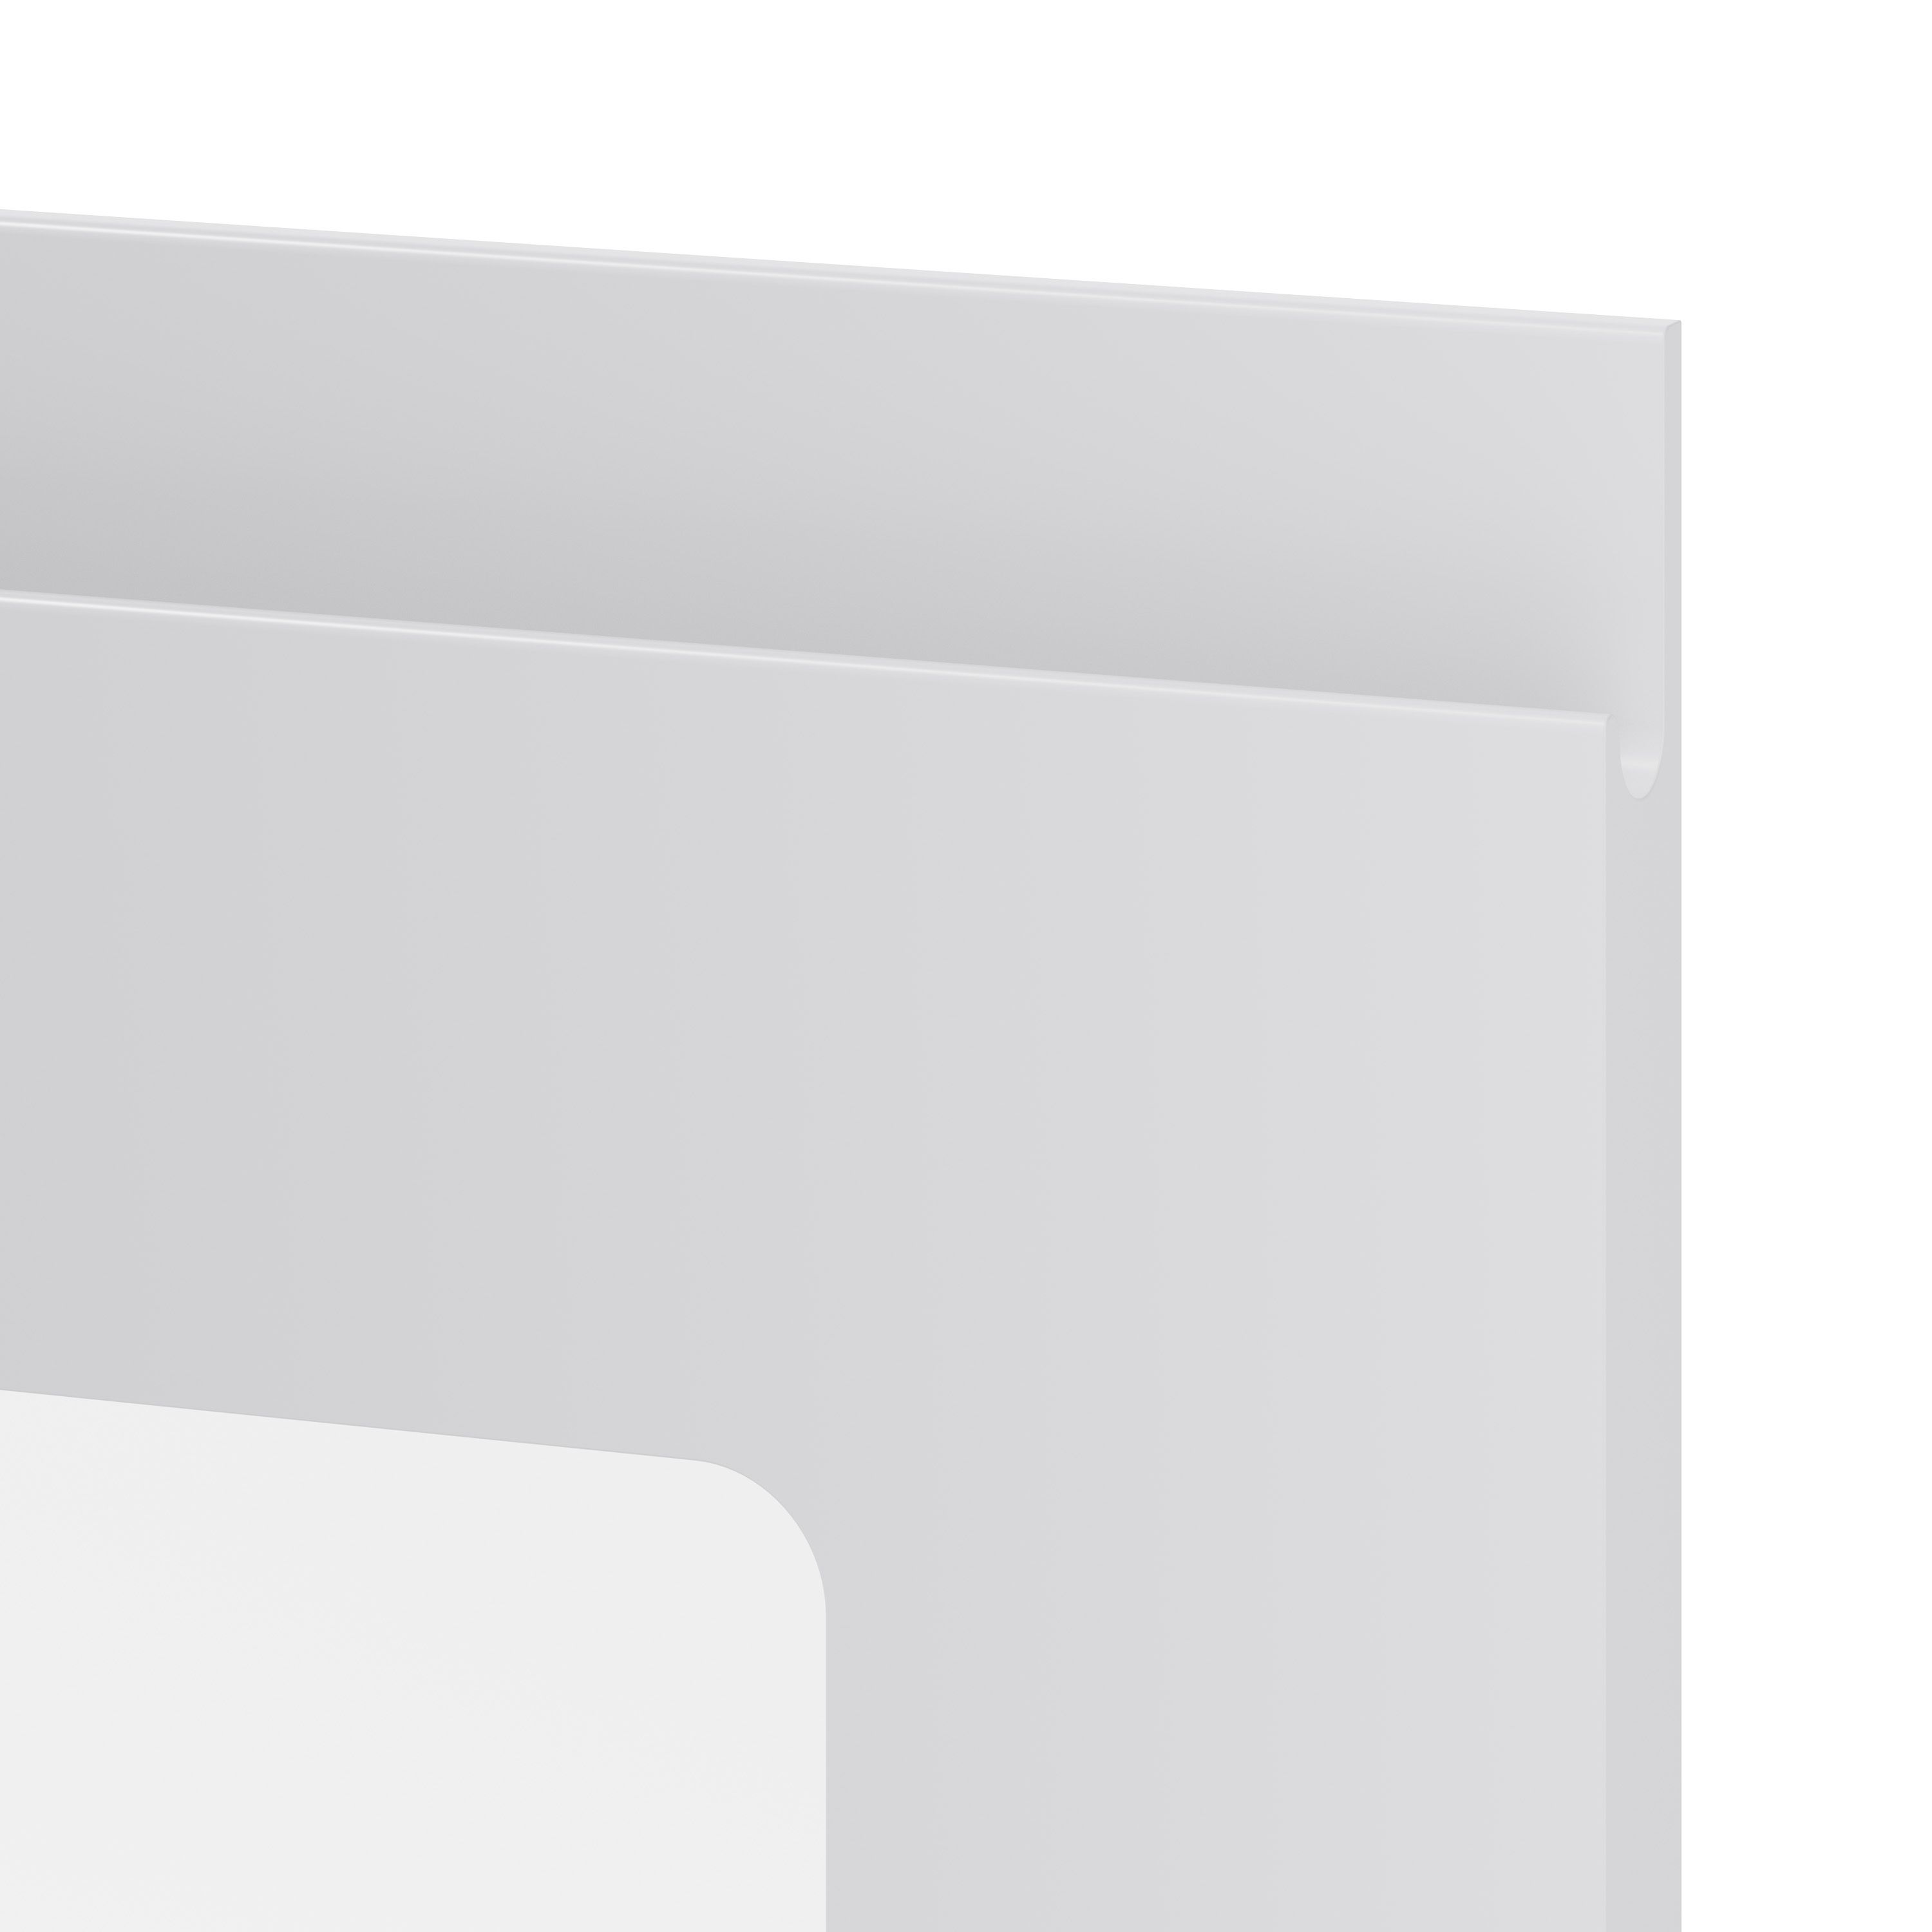 GoodHome Garcinia Gloss light grey integrated handle Glazed Cabinet door (W)300mm (H)715mm (T)19mm